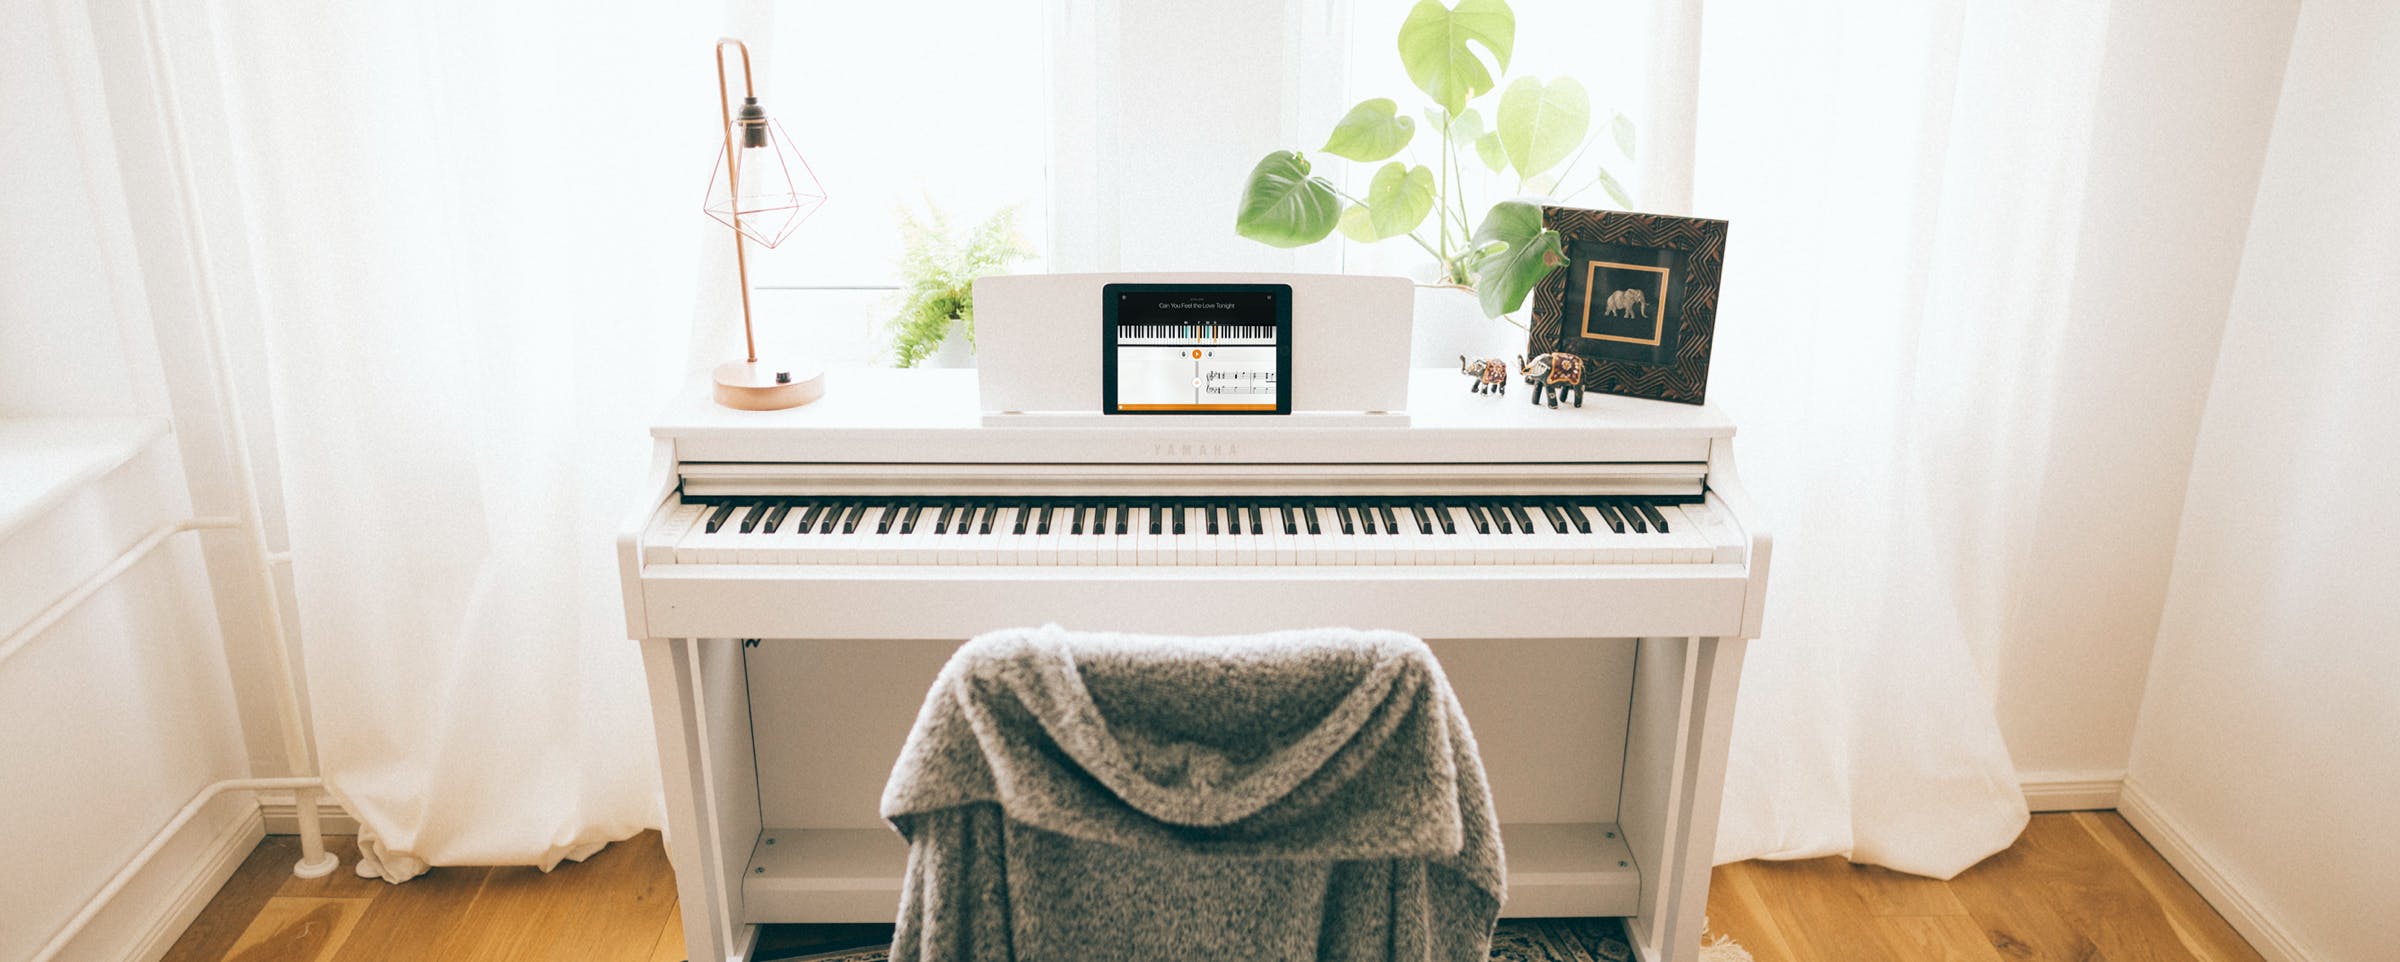 White Yamaha piano with an iPad